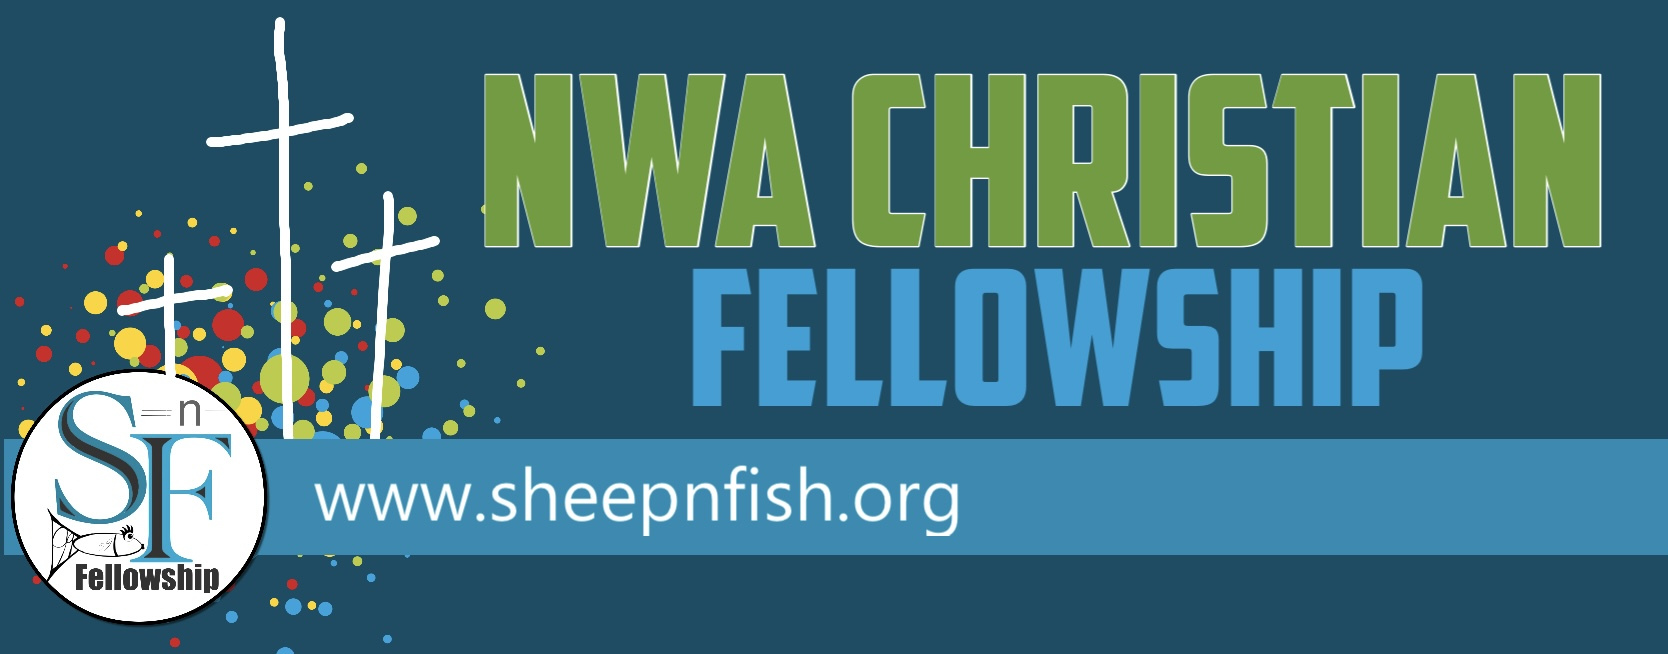 NWA Christian Fellowship -Events, Church